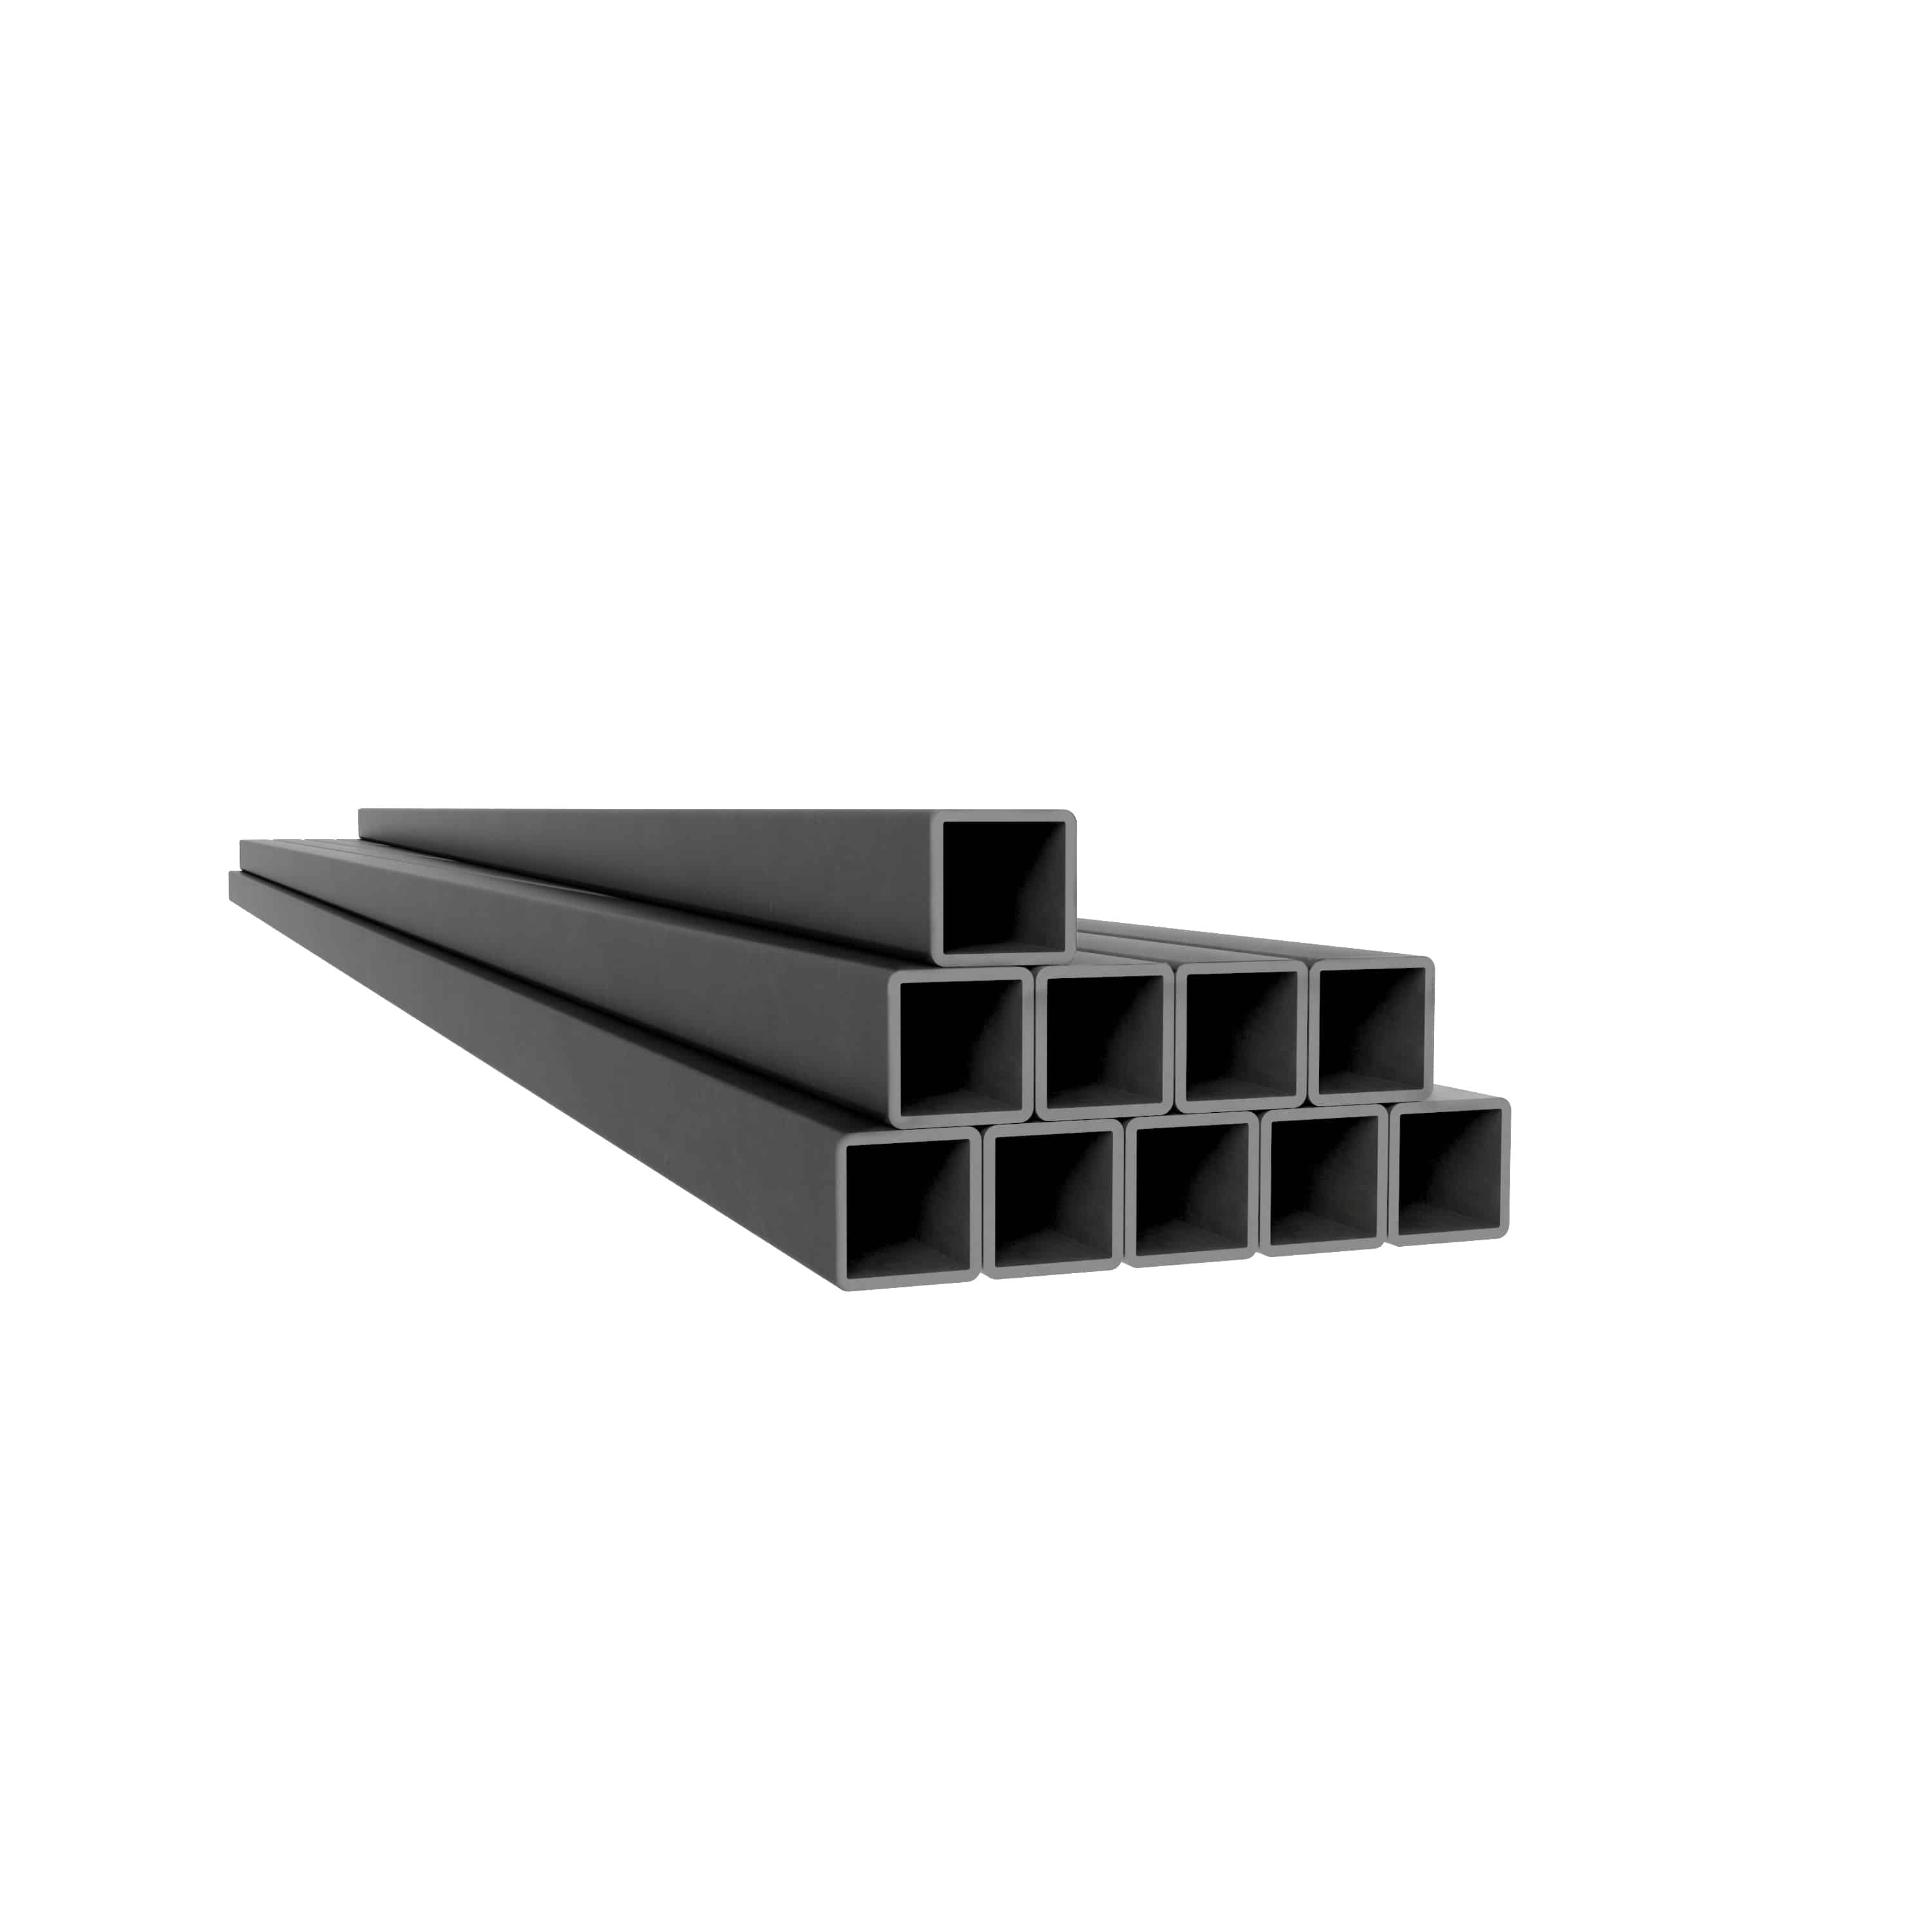 Square Pipe - Square pipe 80 x 80 x 4 mm S235-12LM, https:maxbau.ro